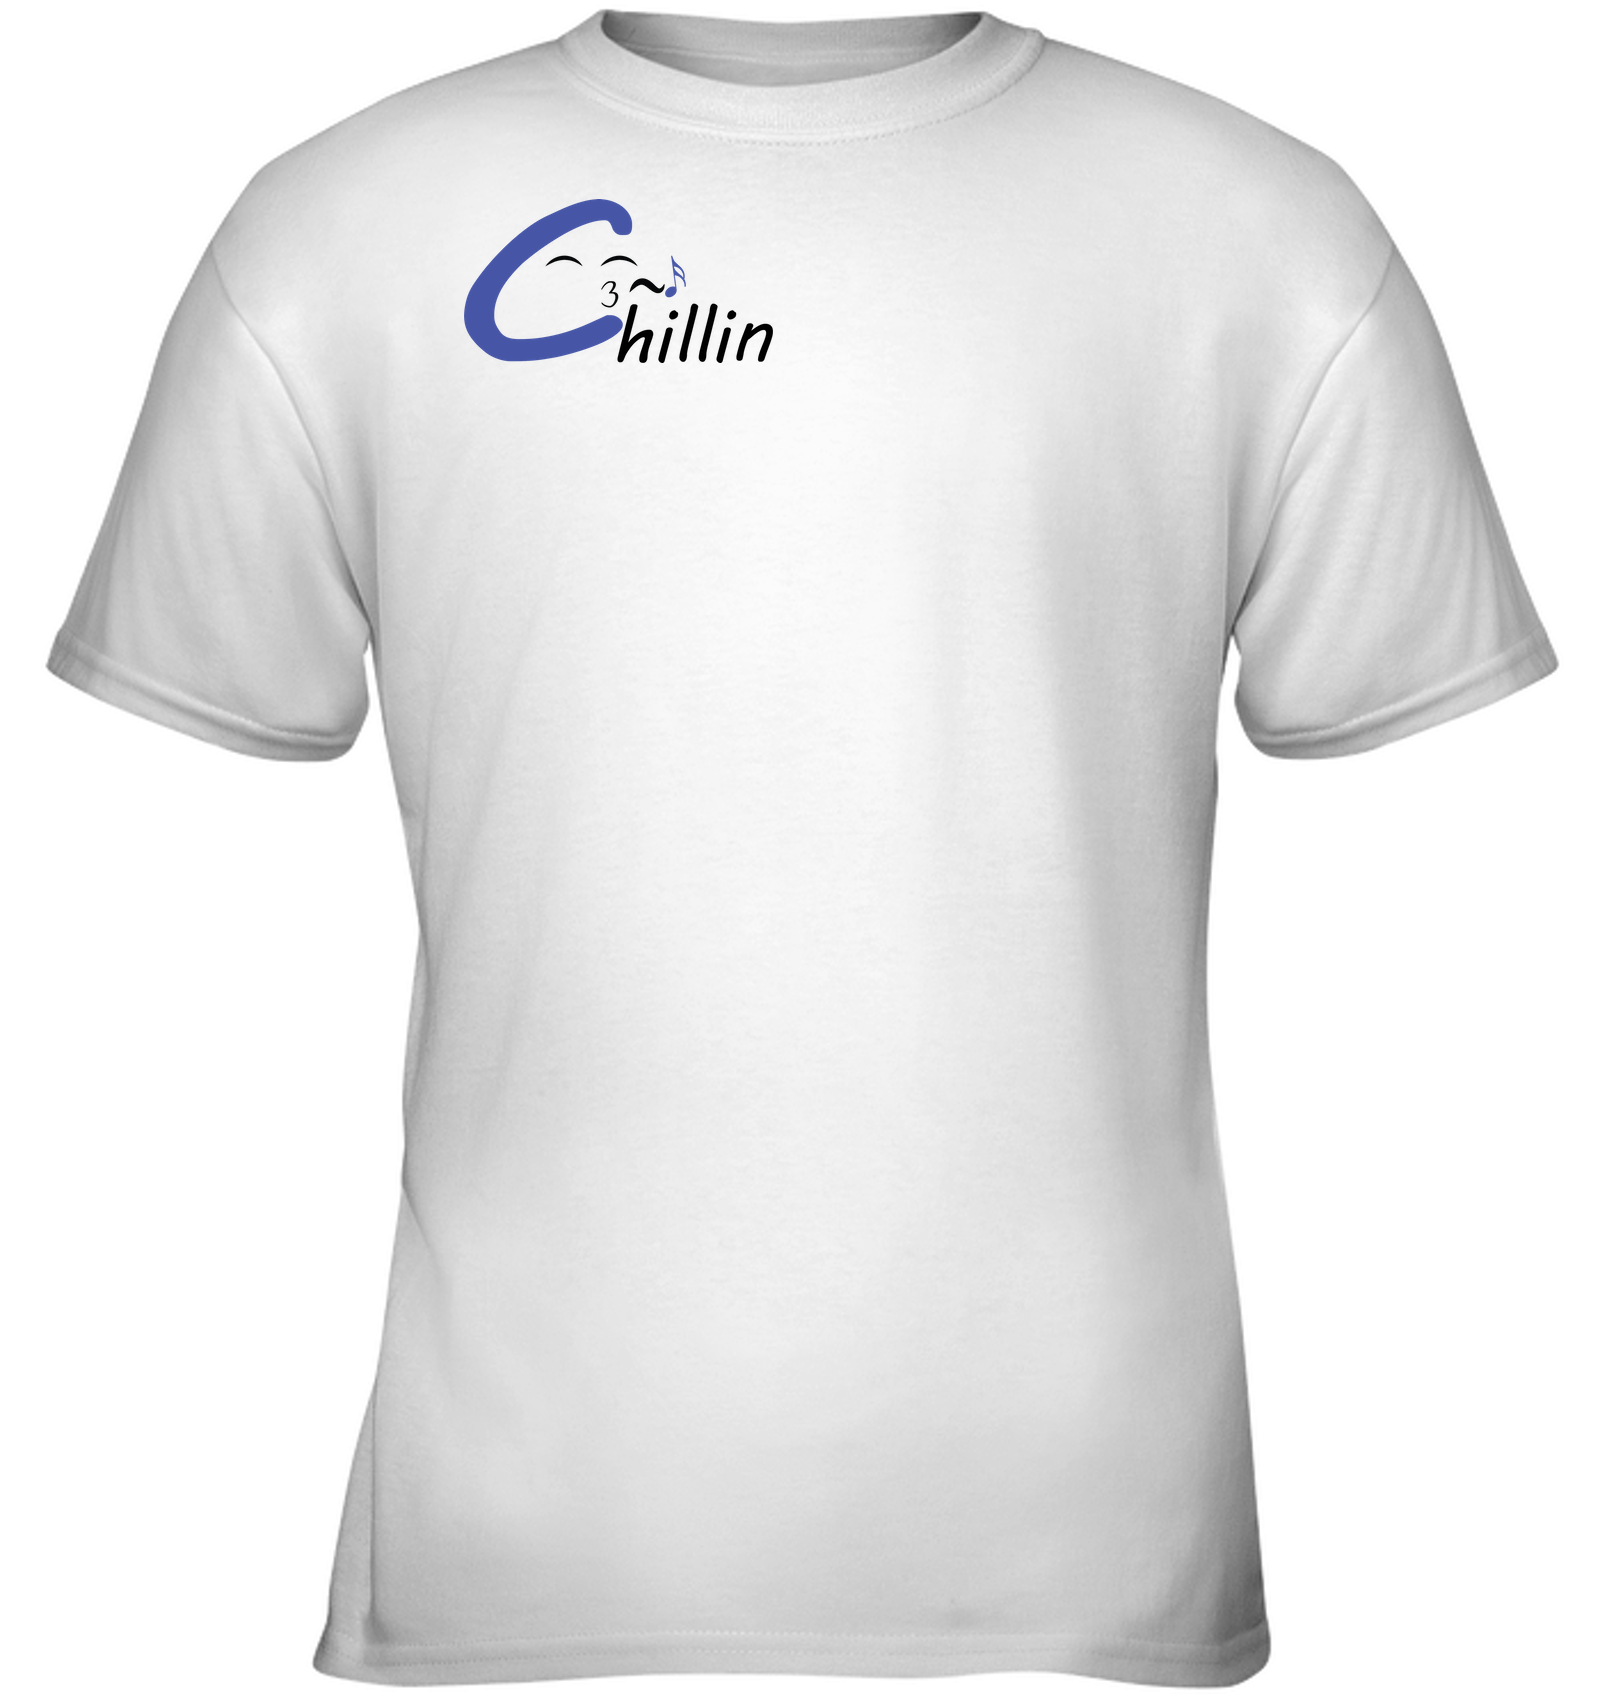 Chillin enjoying music (Pocket Size)) - Gildan Youth Short Sleeve T-Shirt